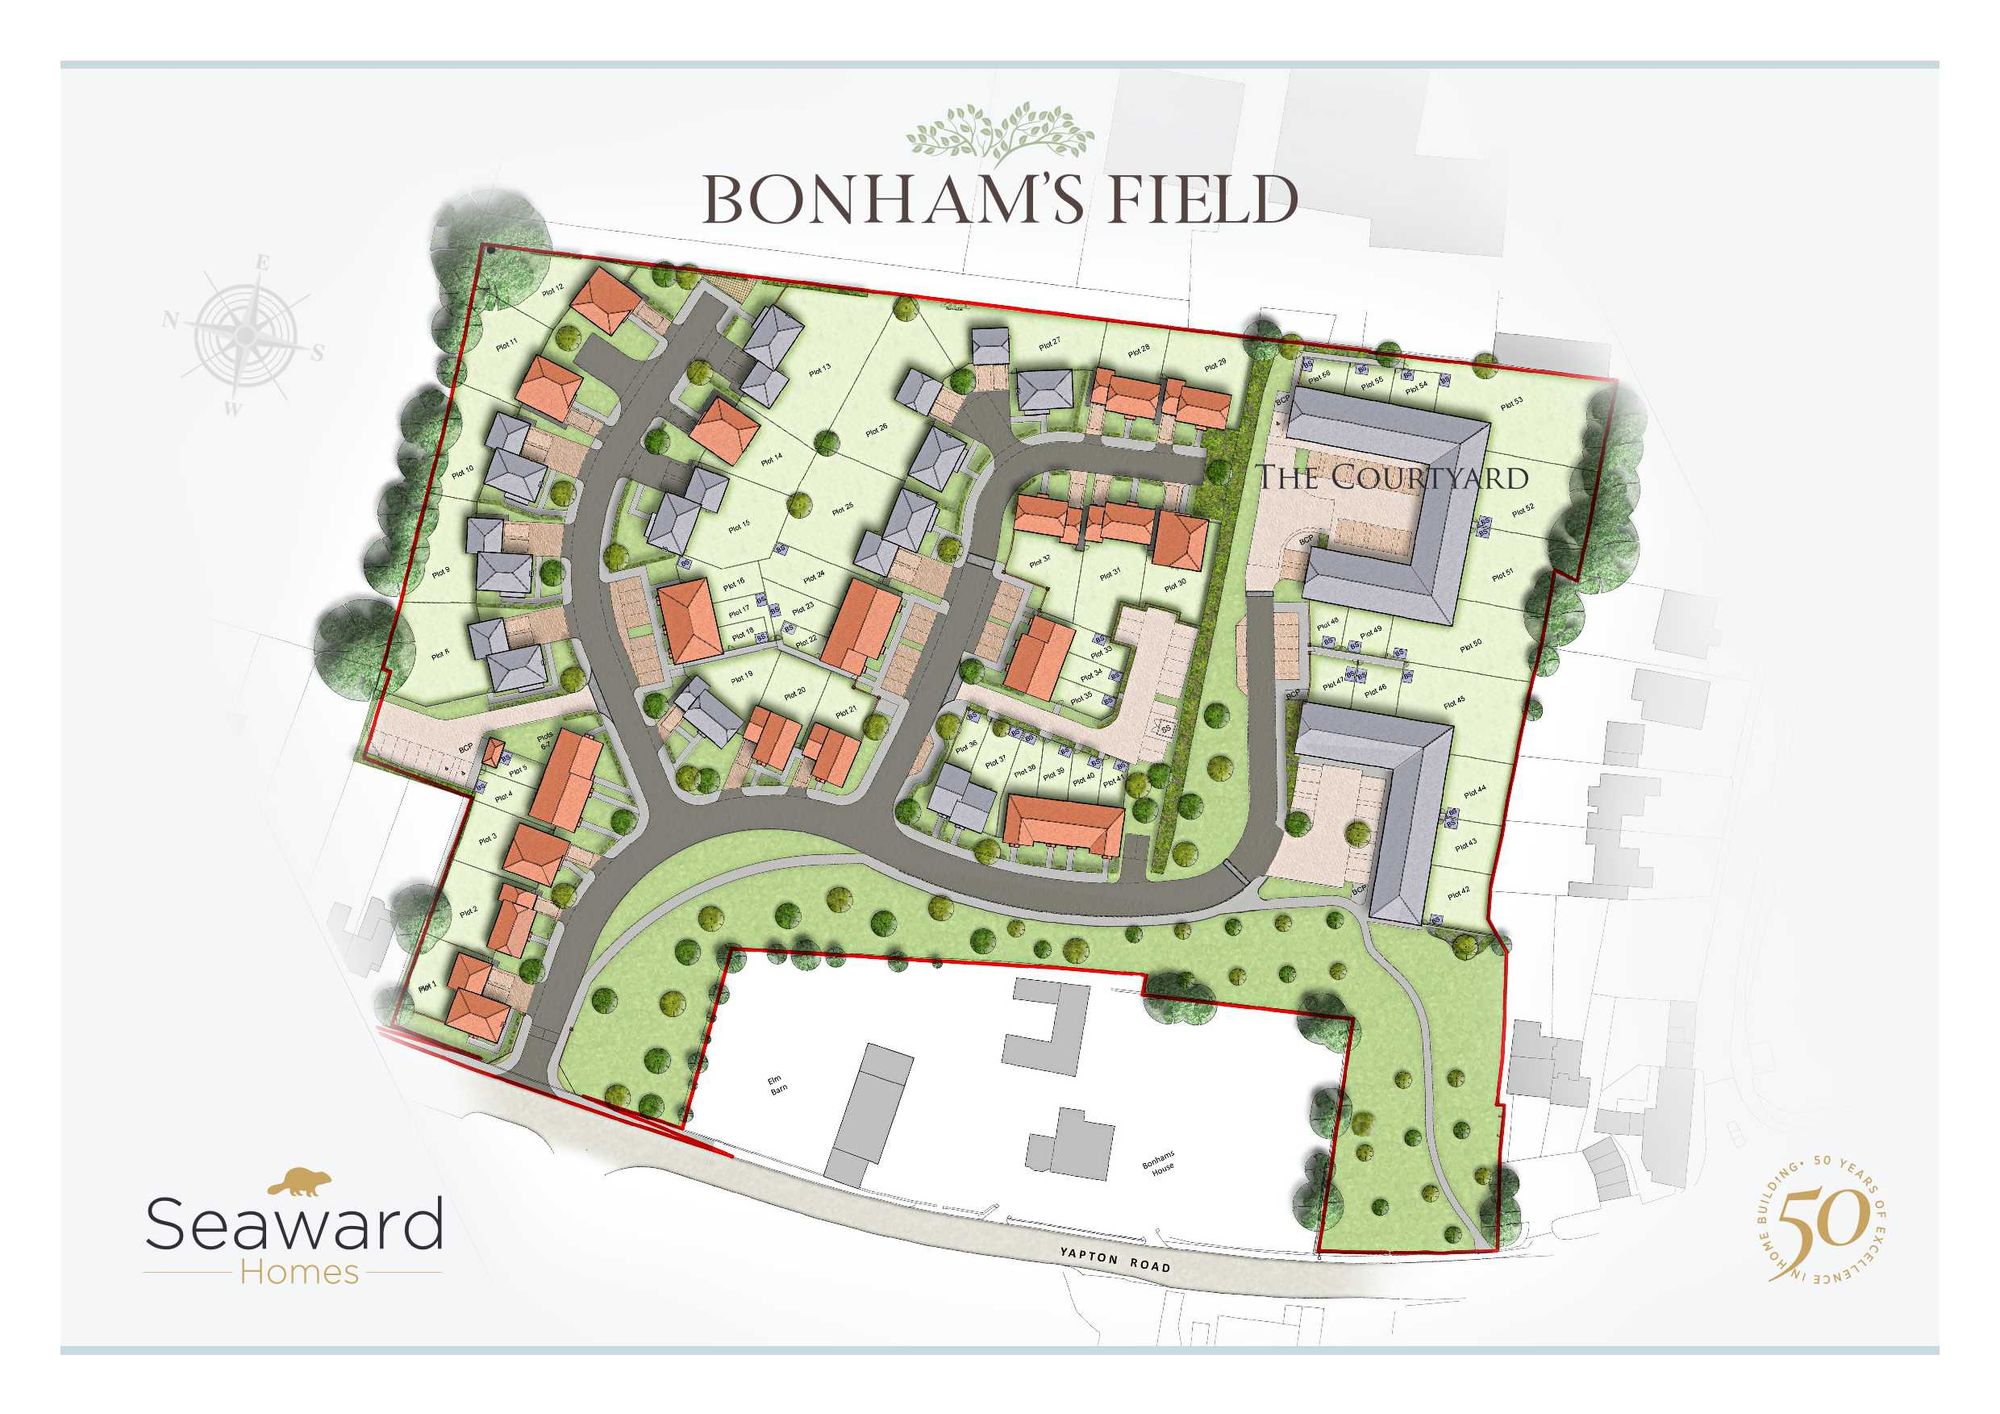 Bonham's Field, Yapton Road, BN18 floorplans